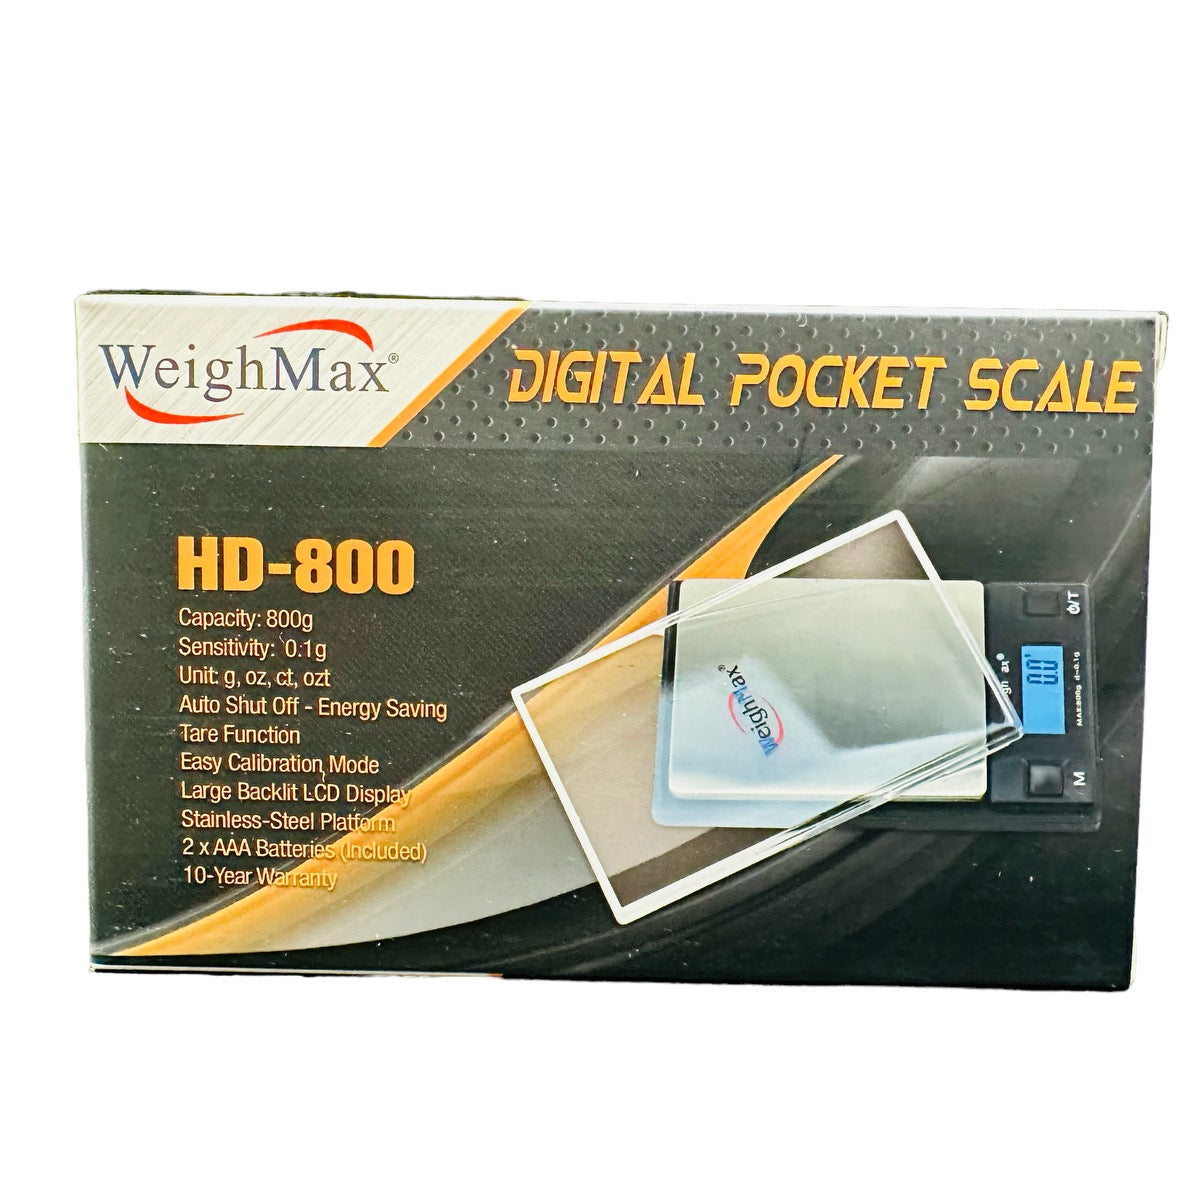 W-HD800 by Weighmax (B2B)